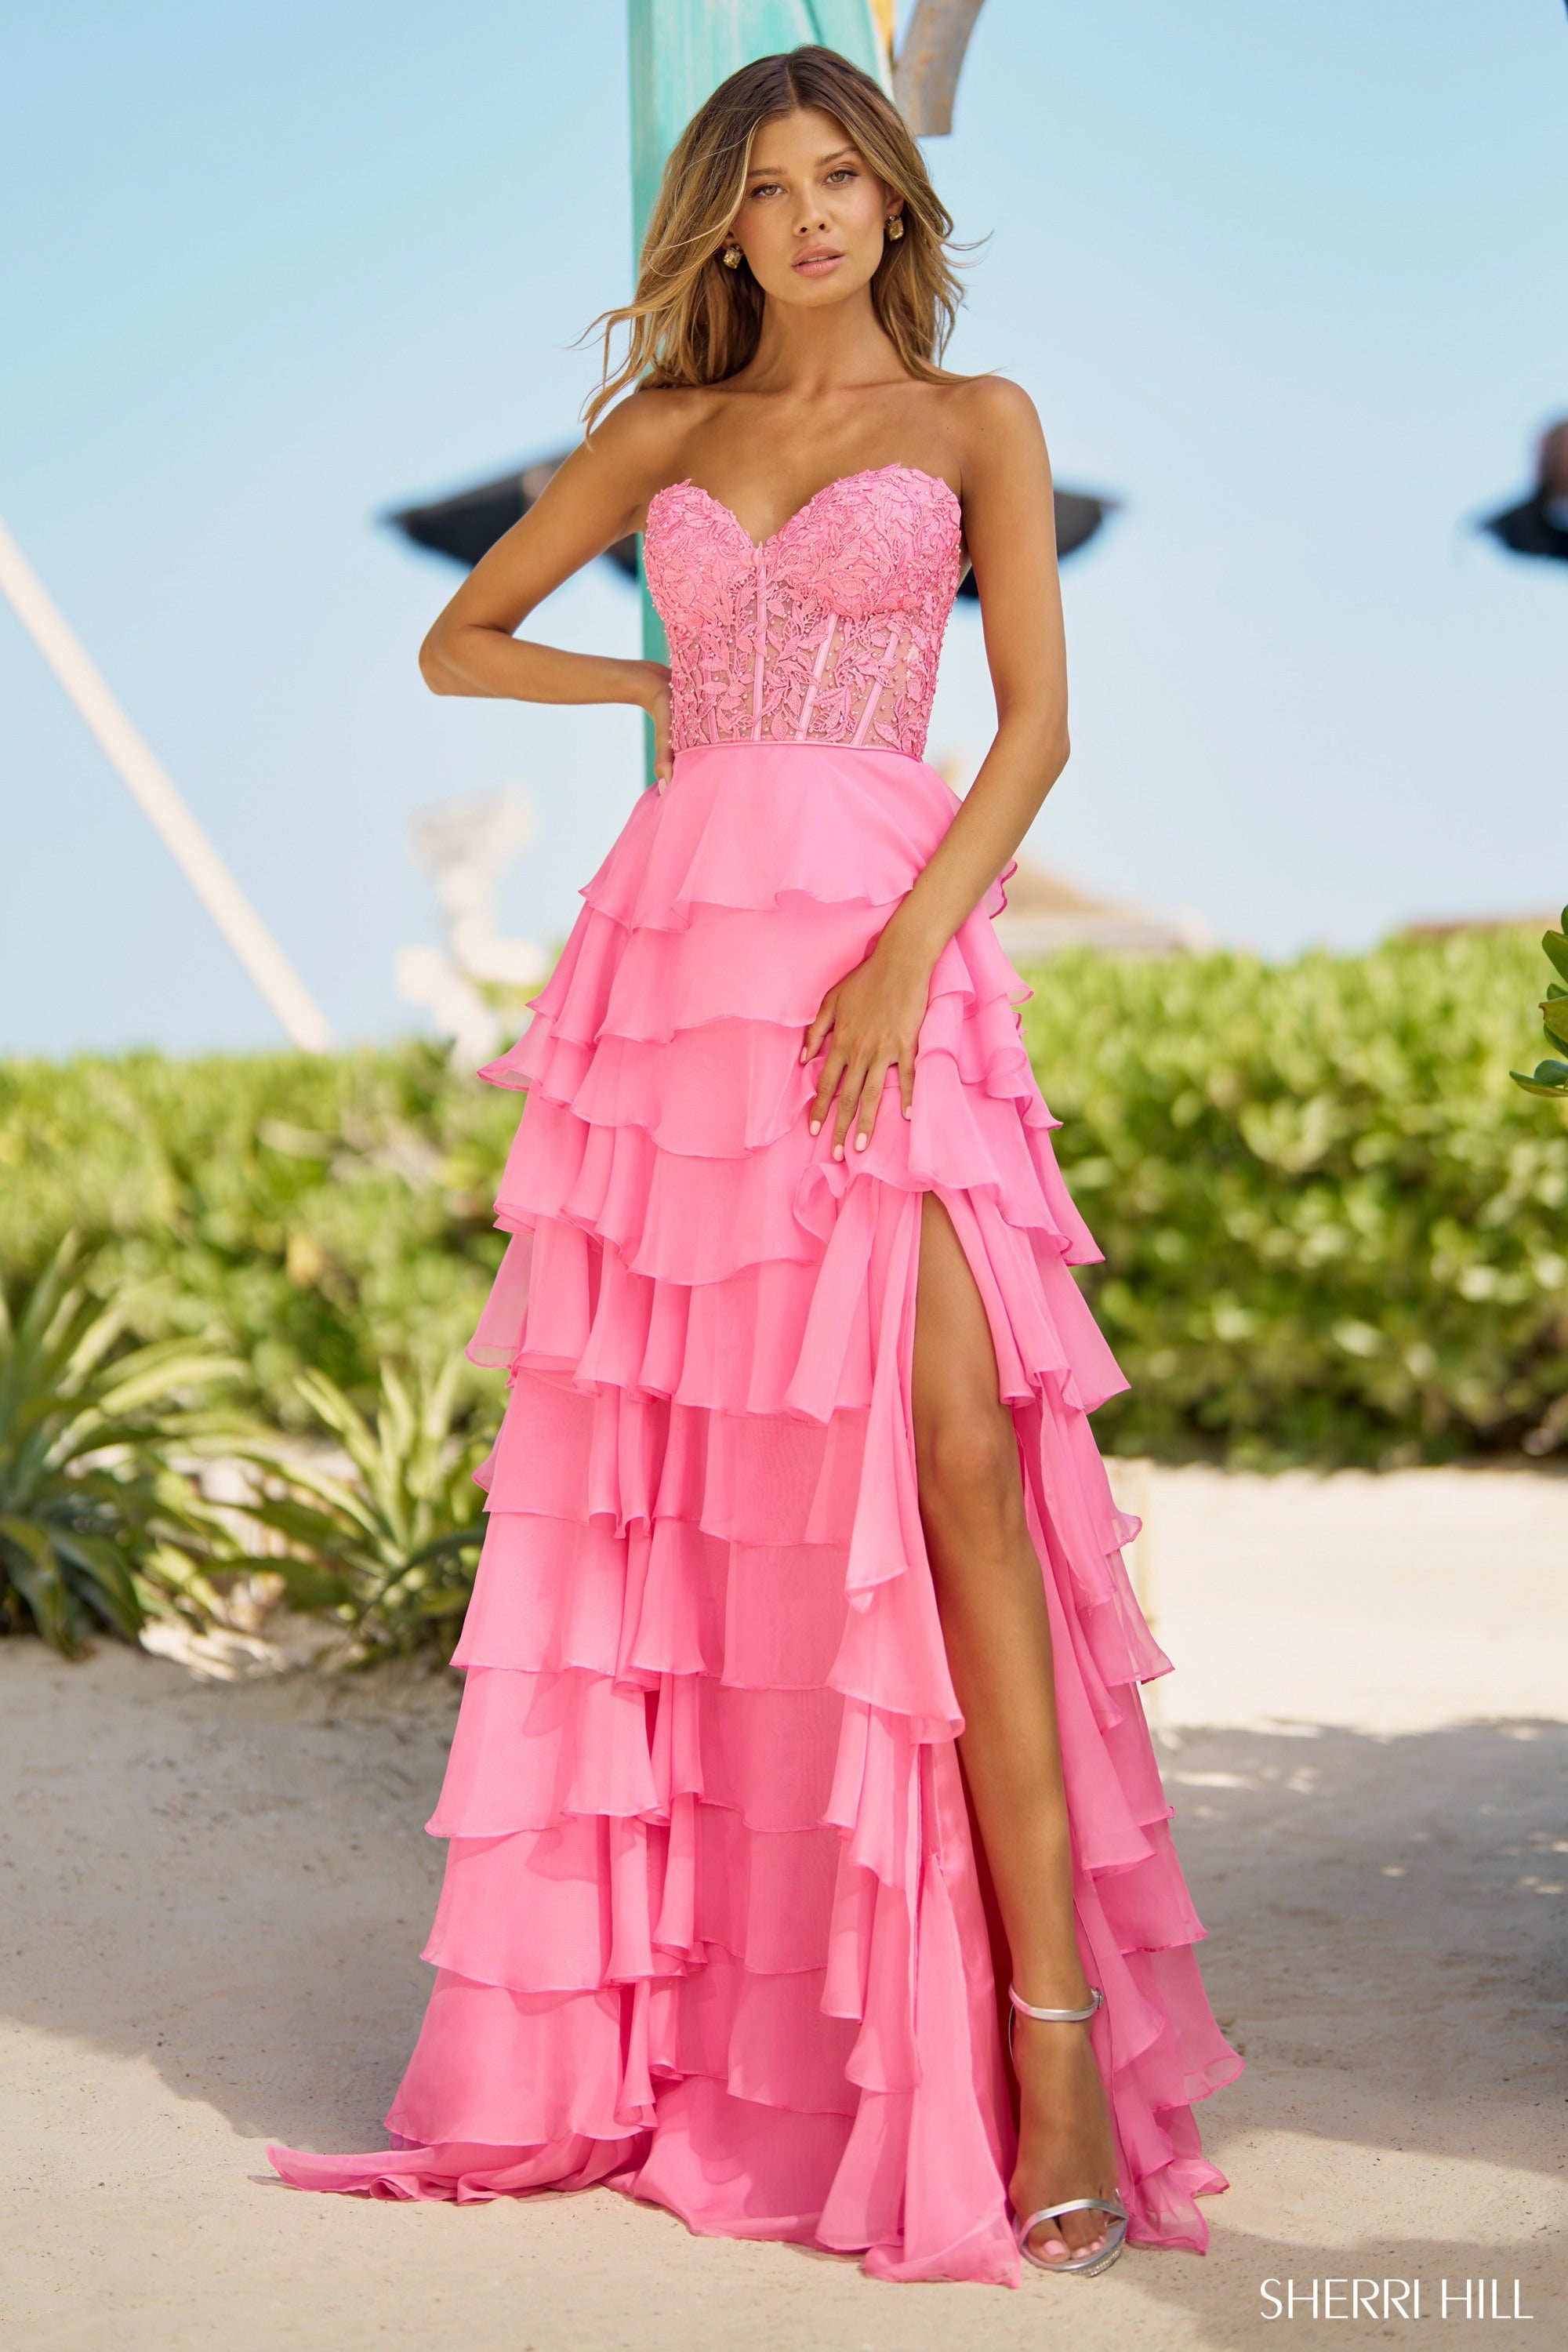 Sherri Hill 56162 Sweetheart Neckline A-Line Chiffon Lace Evening Gown B Chic Fashions Long Dress Evening Gowns